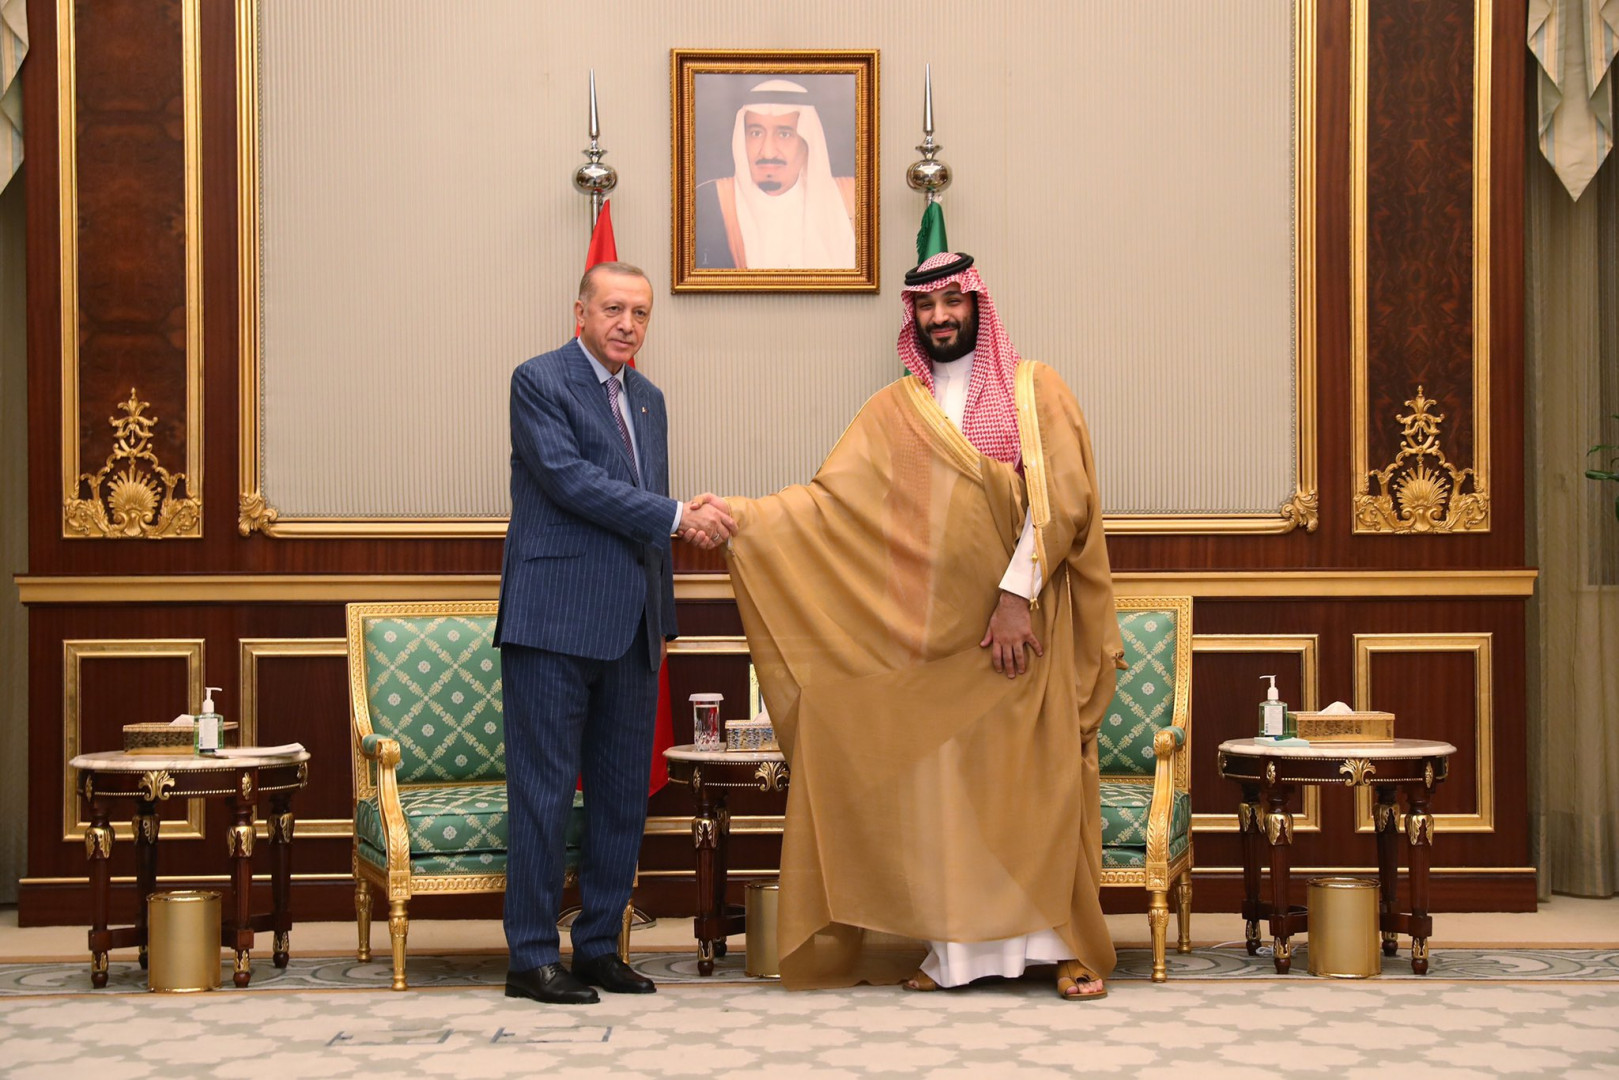 Turkiye, Saudi Arabia striving to increase all kinds of relations: Turkish president